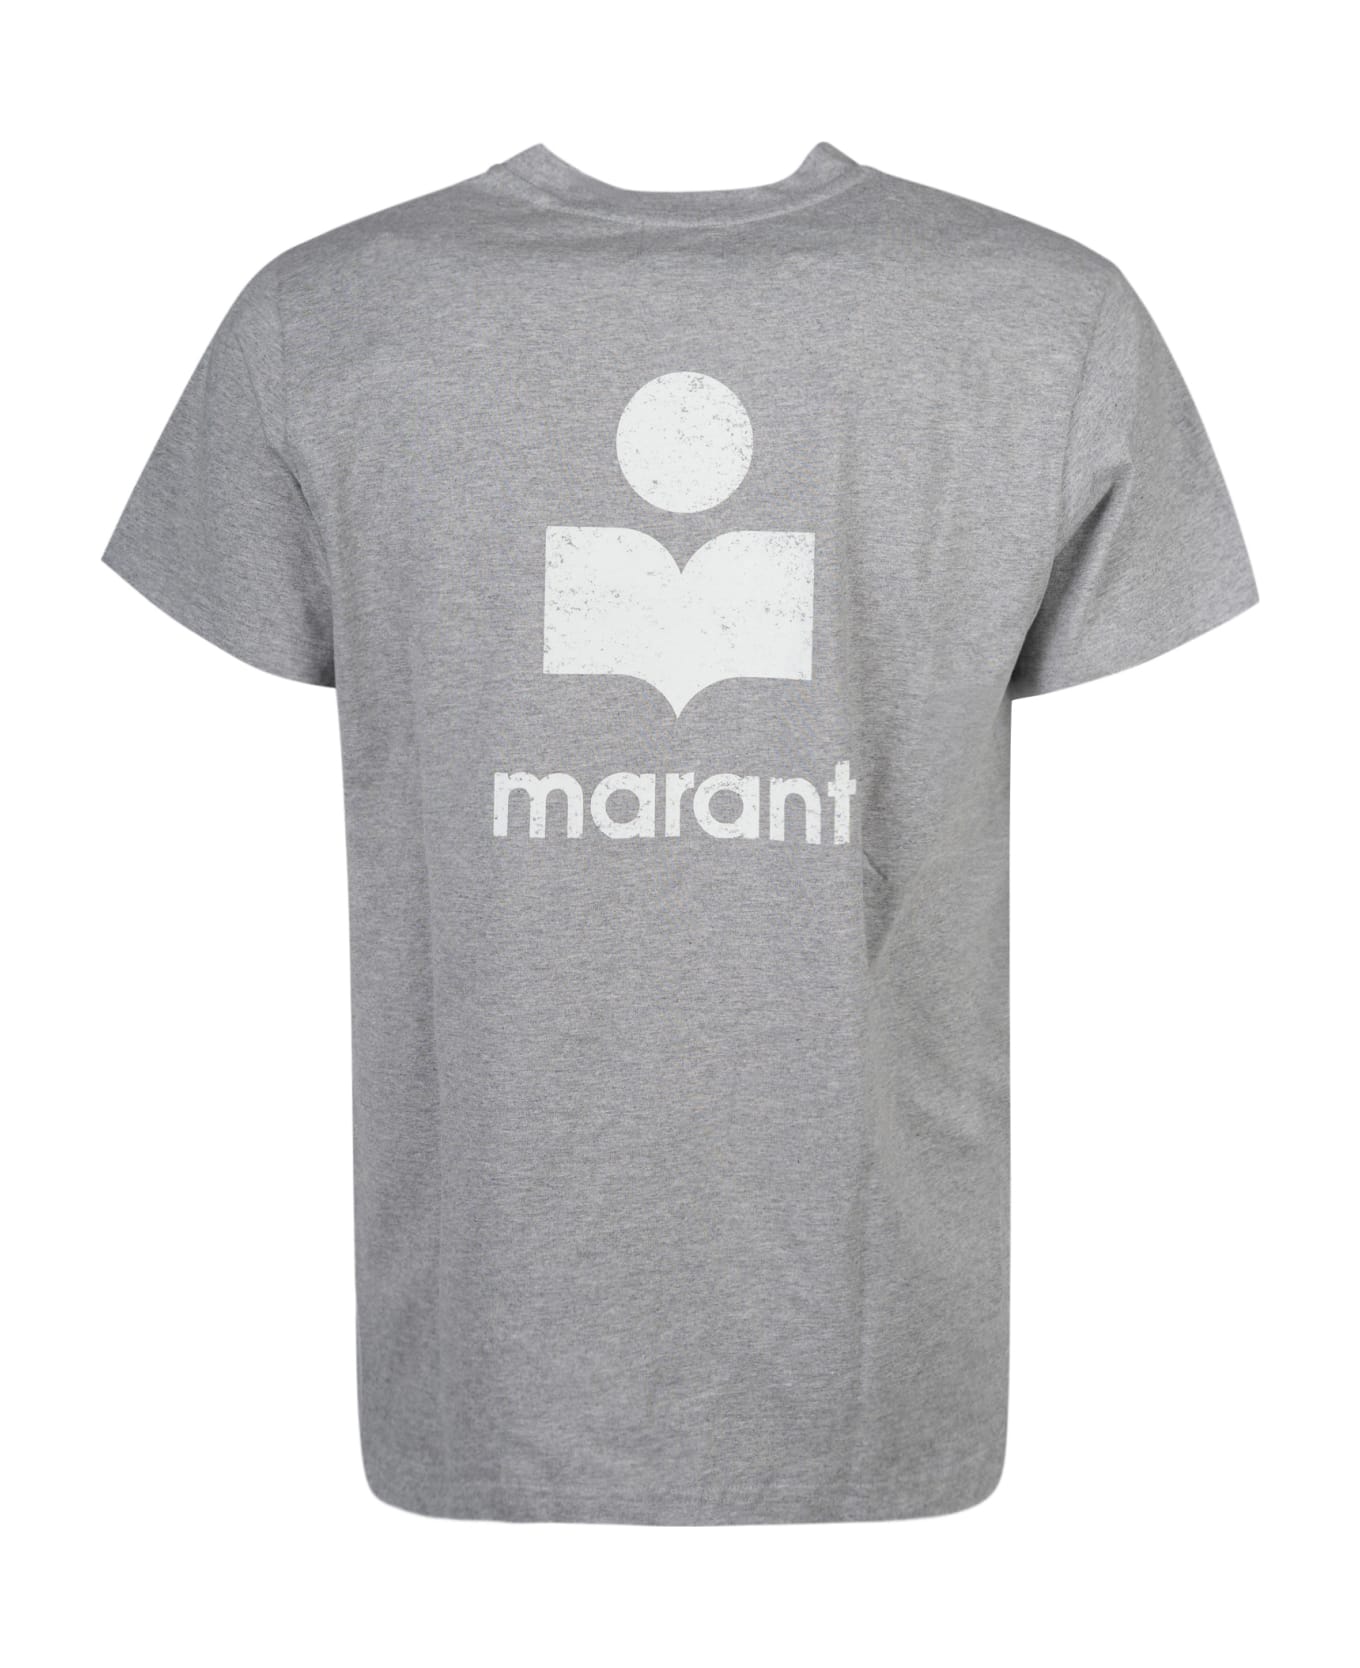 Isabel Marant Zafferh T-shirt - Ecru/Grey